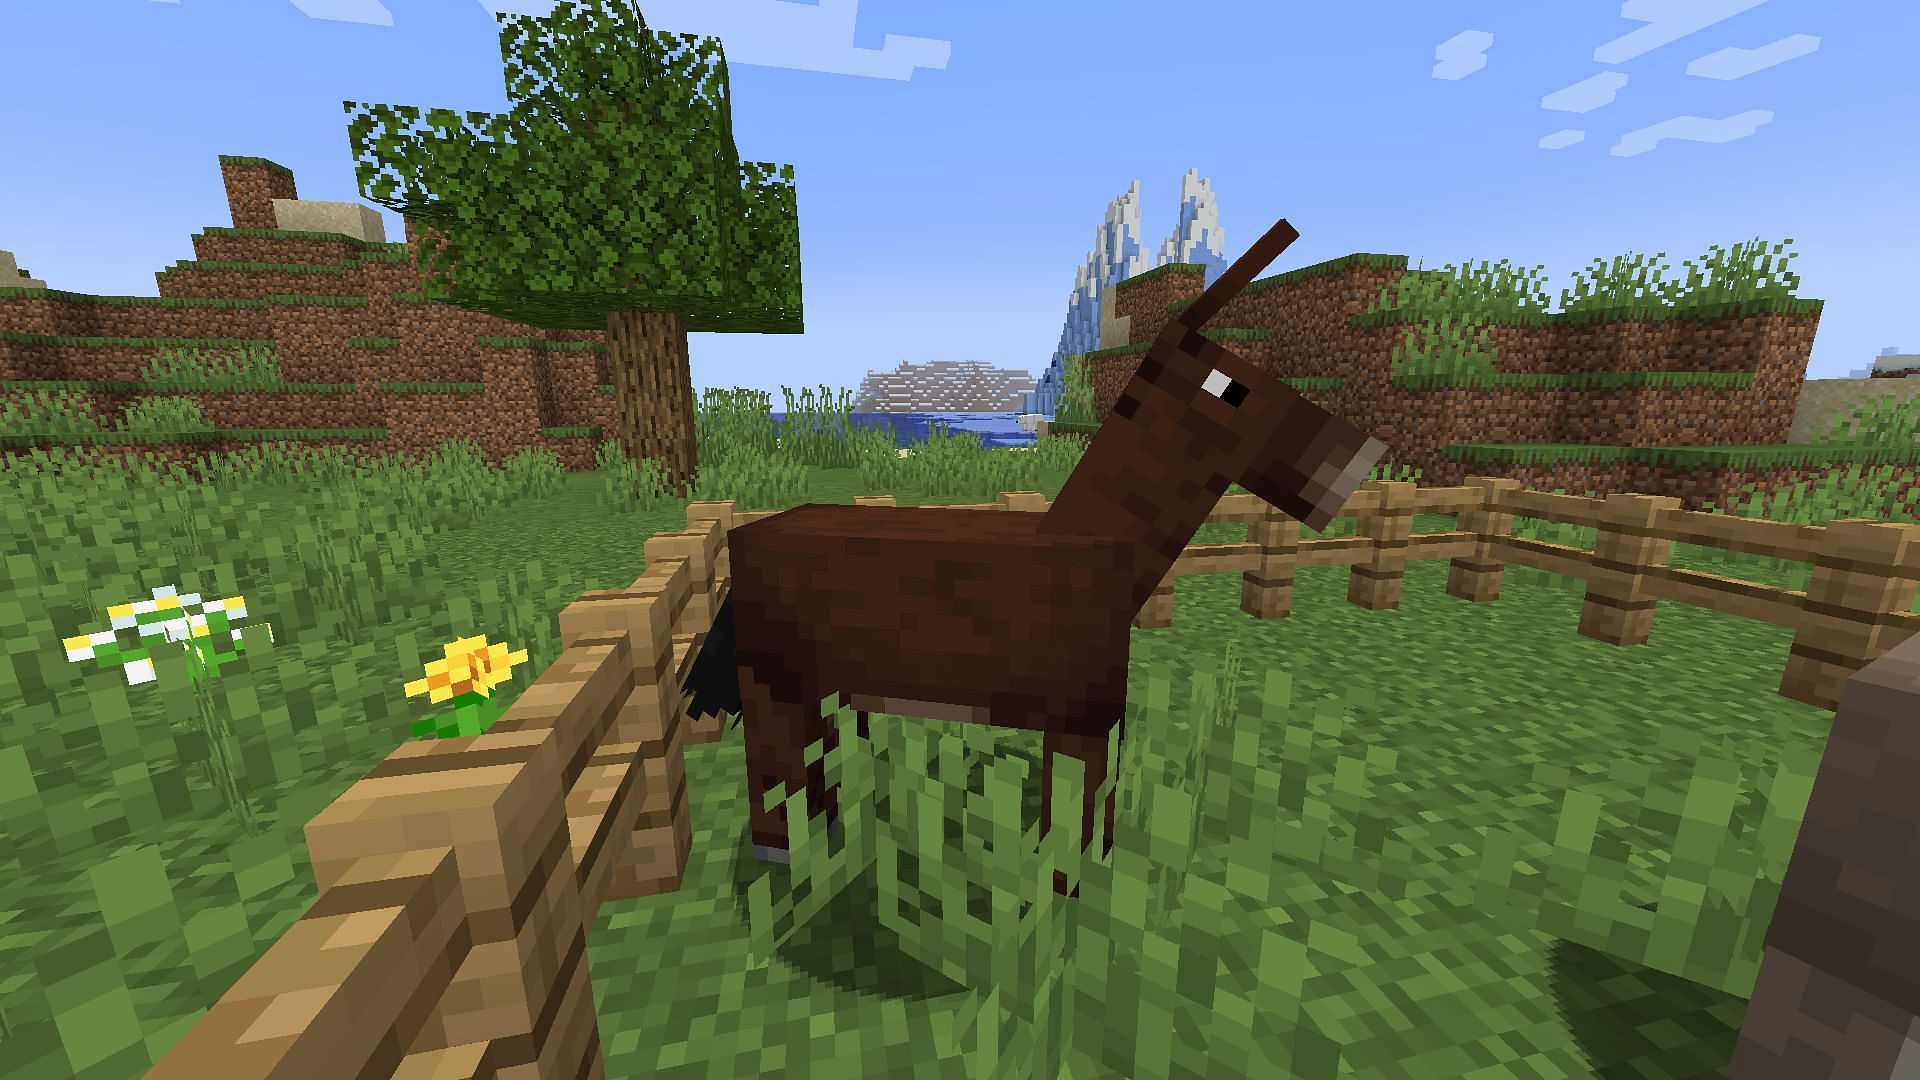 Mules are cross-breed (Image via Minecraft)